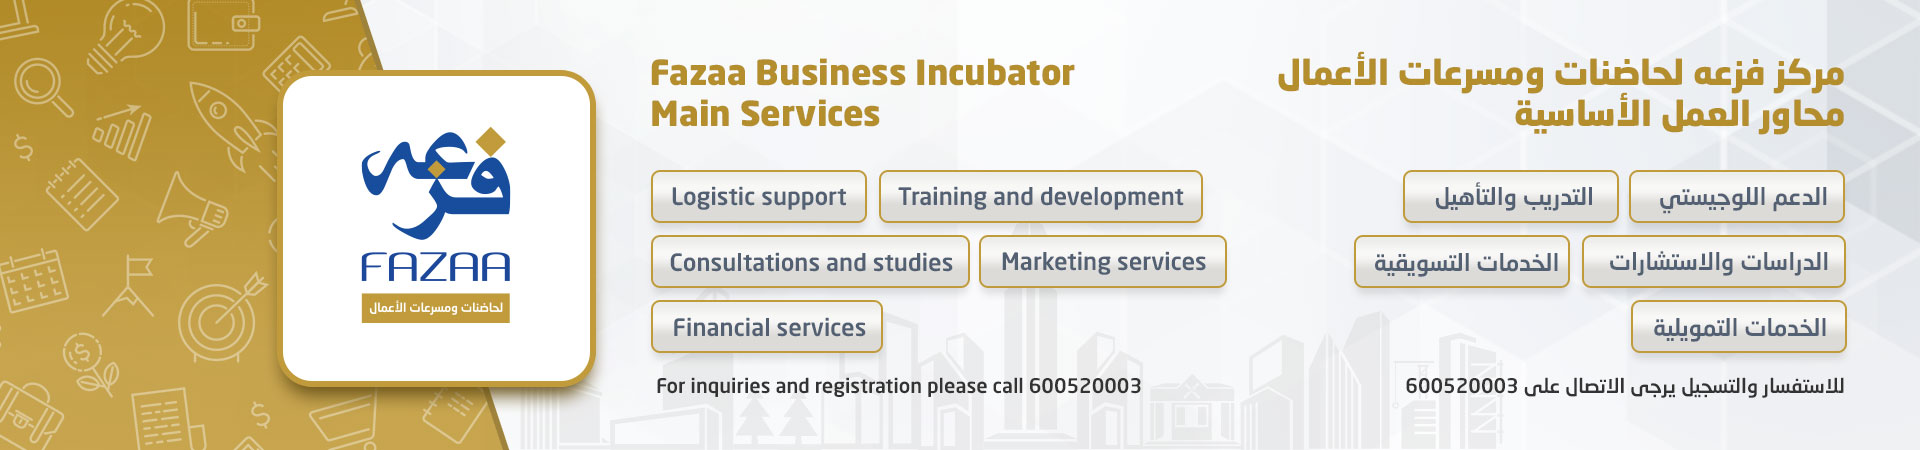 Fazaa Center for Business Incubators and Accelerators